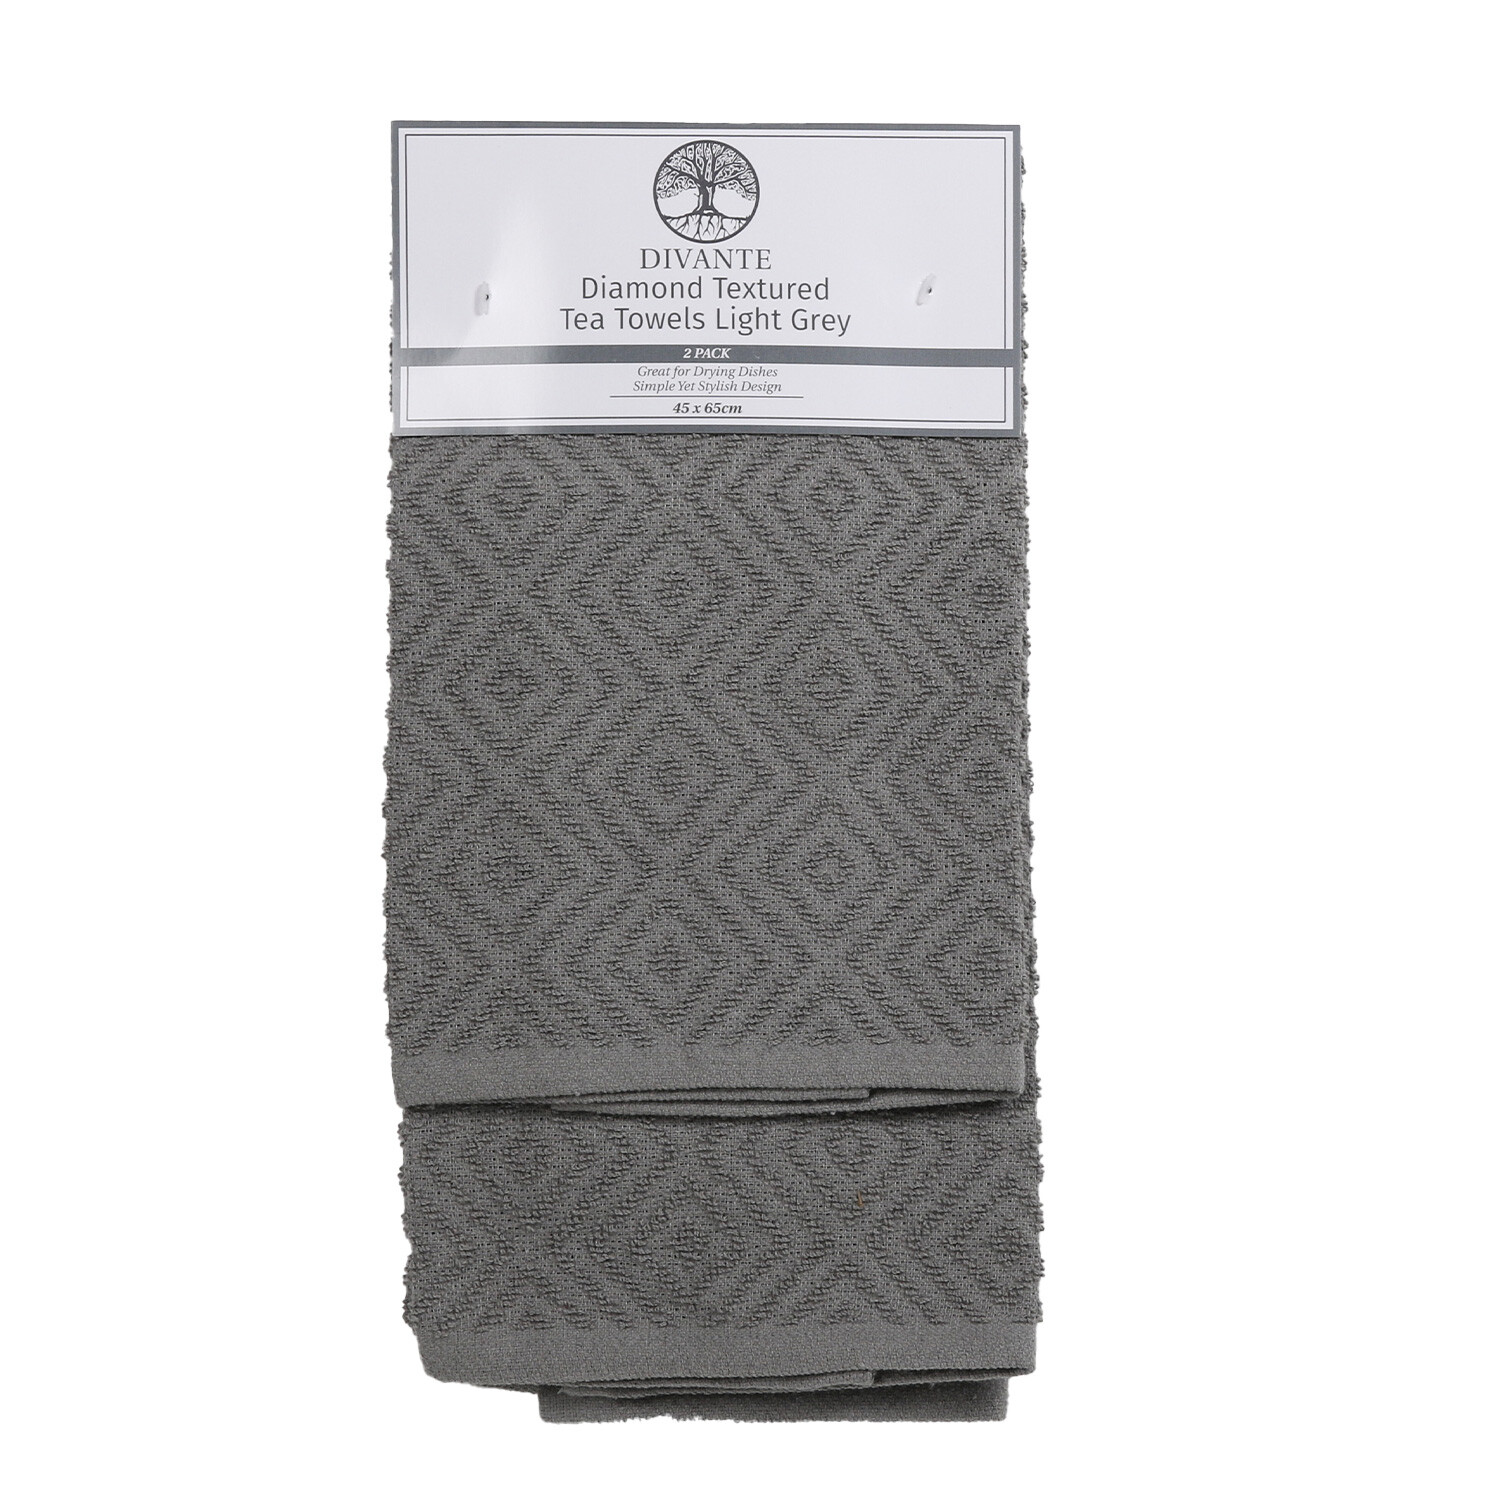 Divante Light Grey Diamond Textured Tea Towel 2 Pack Image